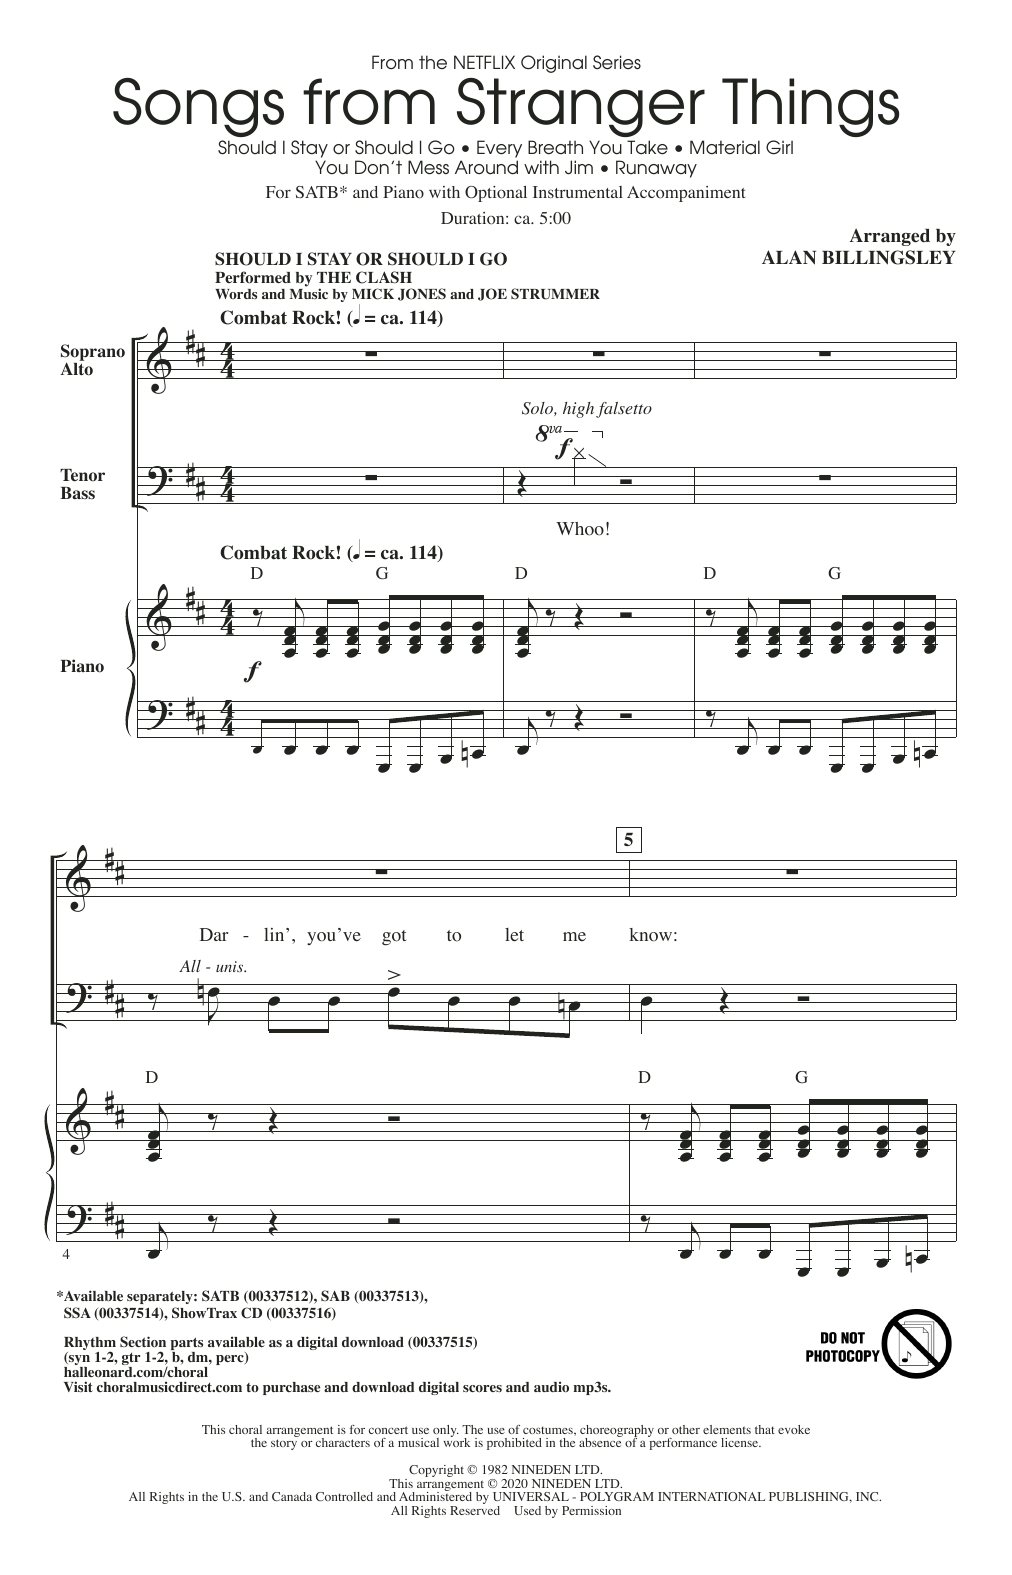 Alan Billingsley Songs from Stranger Things (arr. Alan Billingsley) sheet music notes and chords arranged for SAB Choir